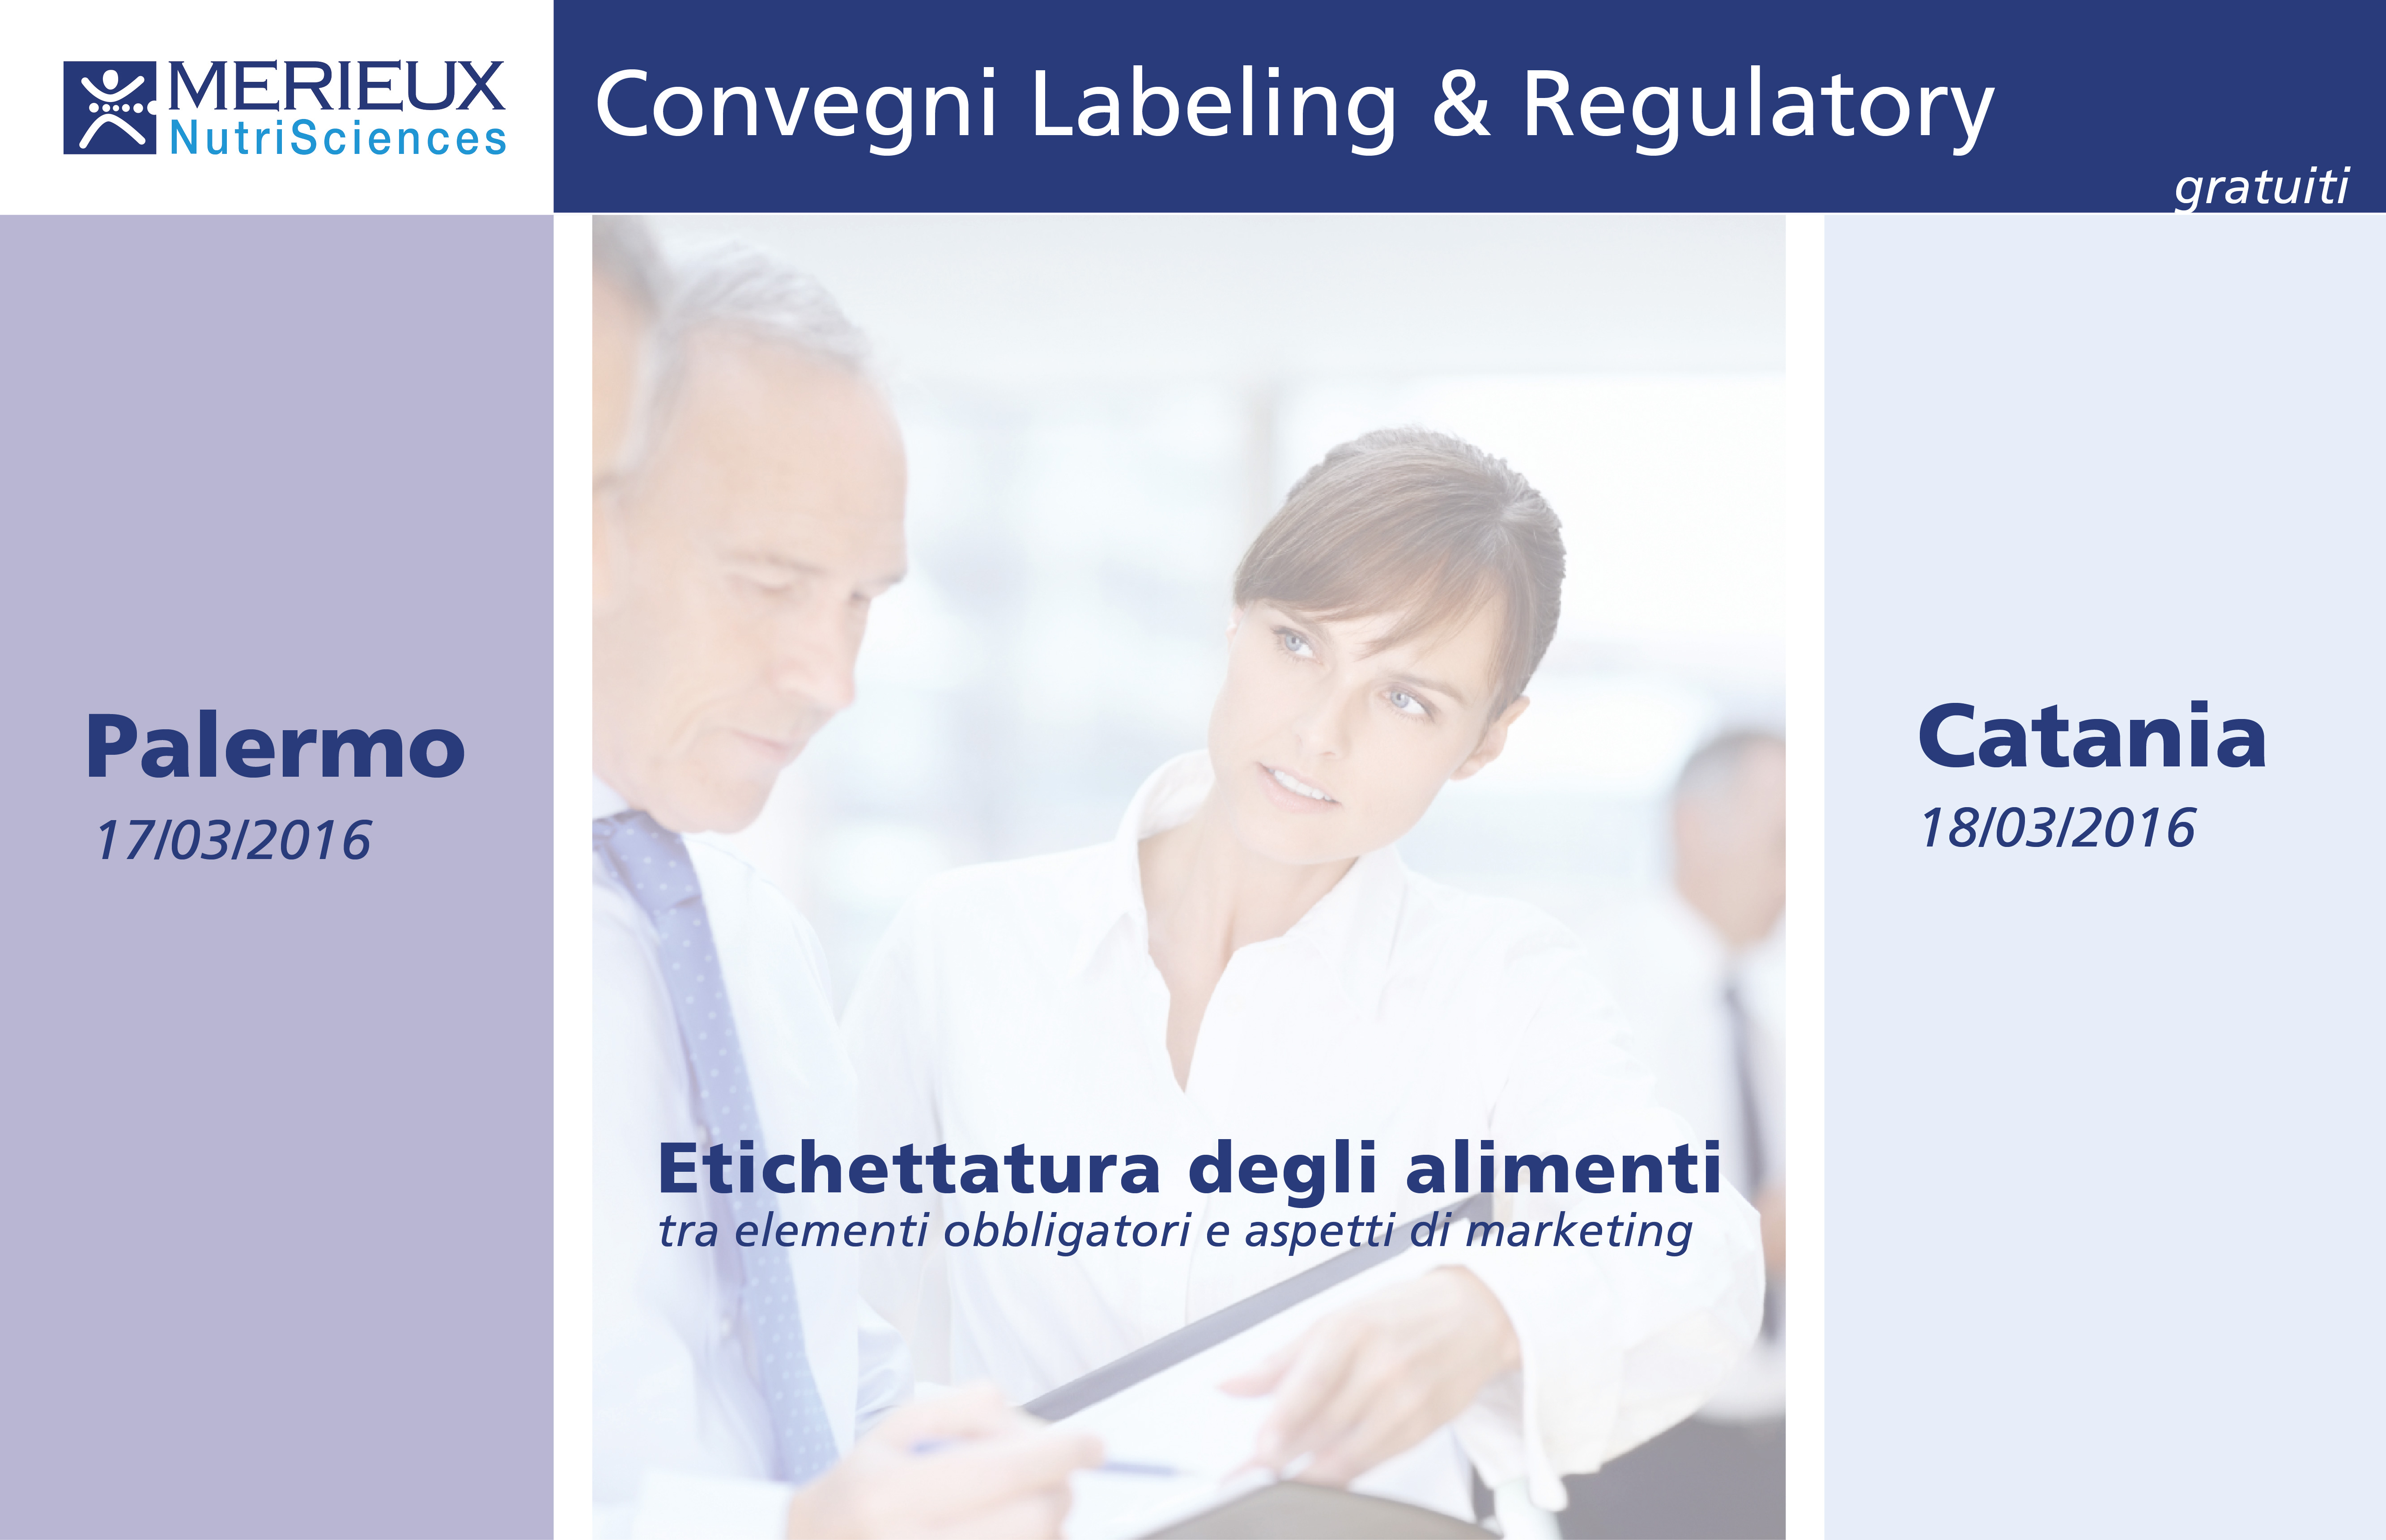 Merieux NutriSciences Convegni Labeling and Regulatory Services gratuiti a Palermo e Catania, Marzo 2016 